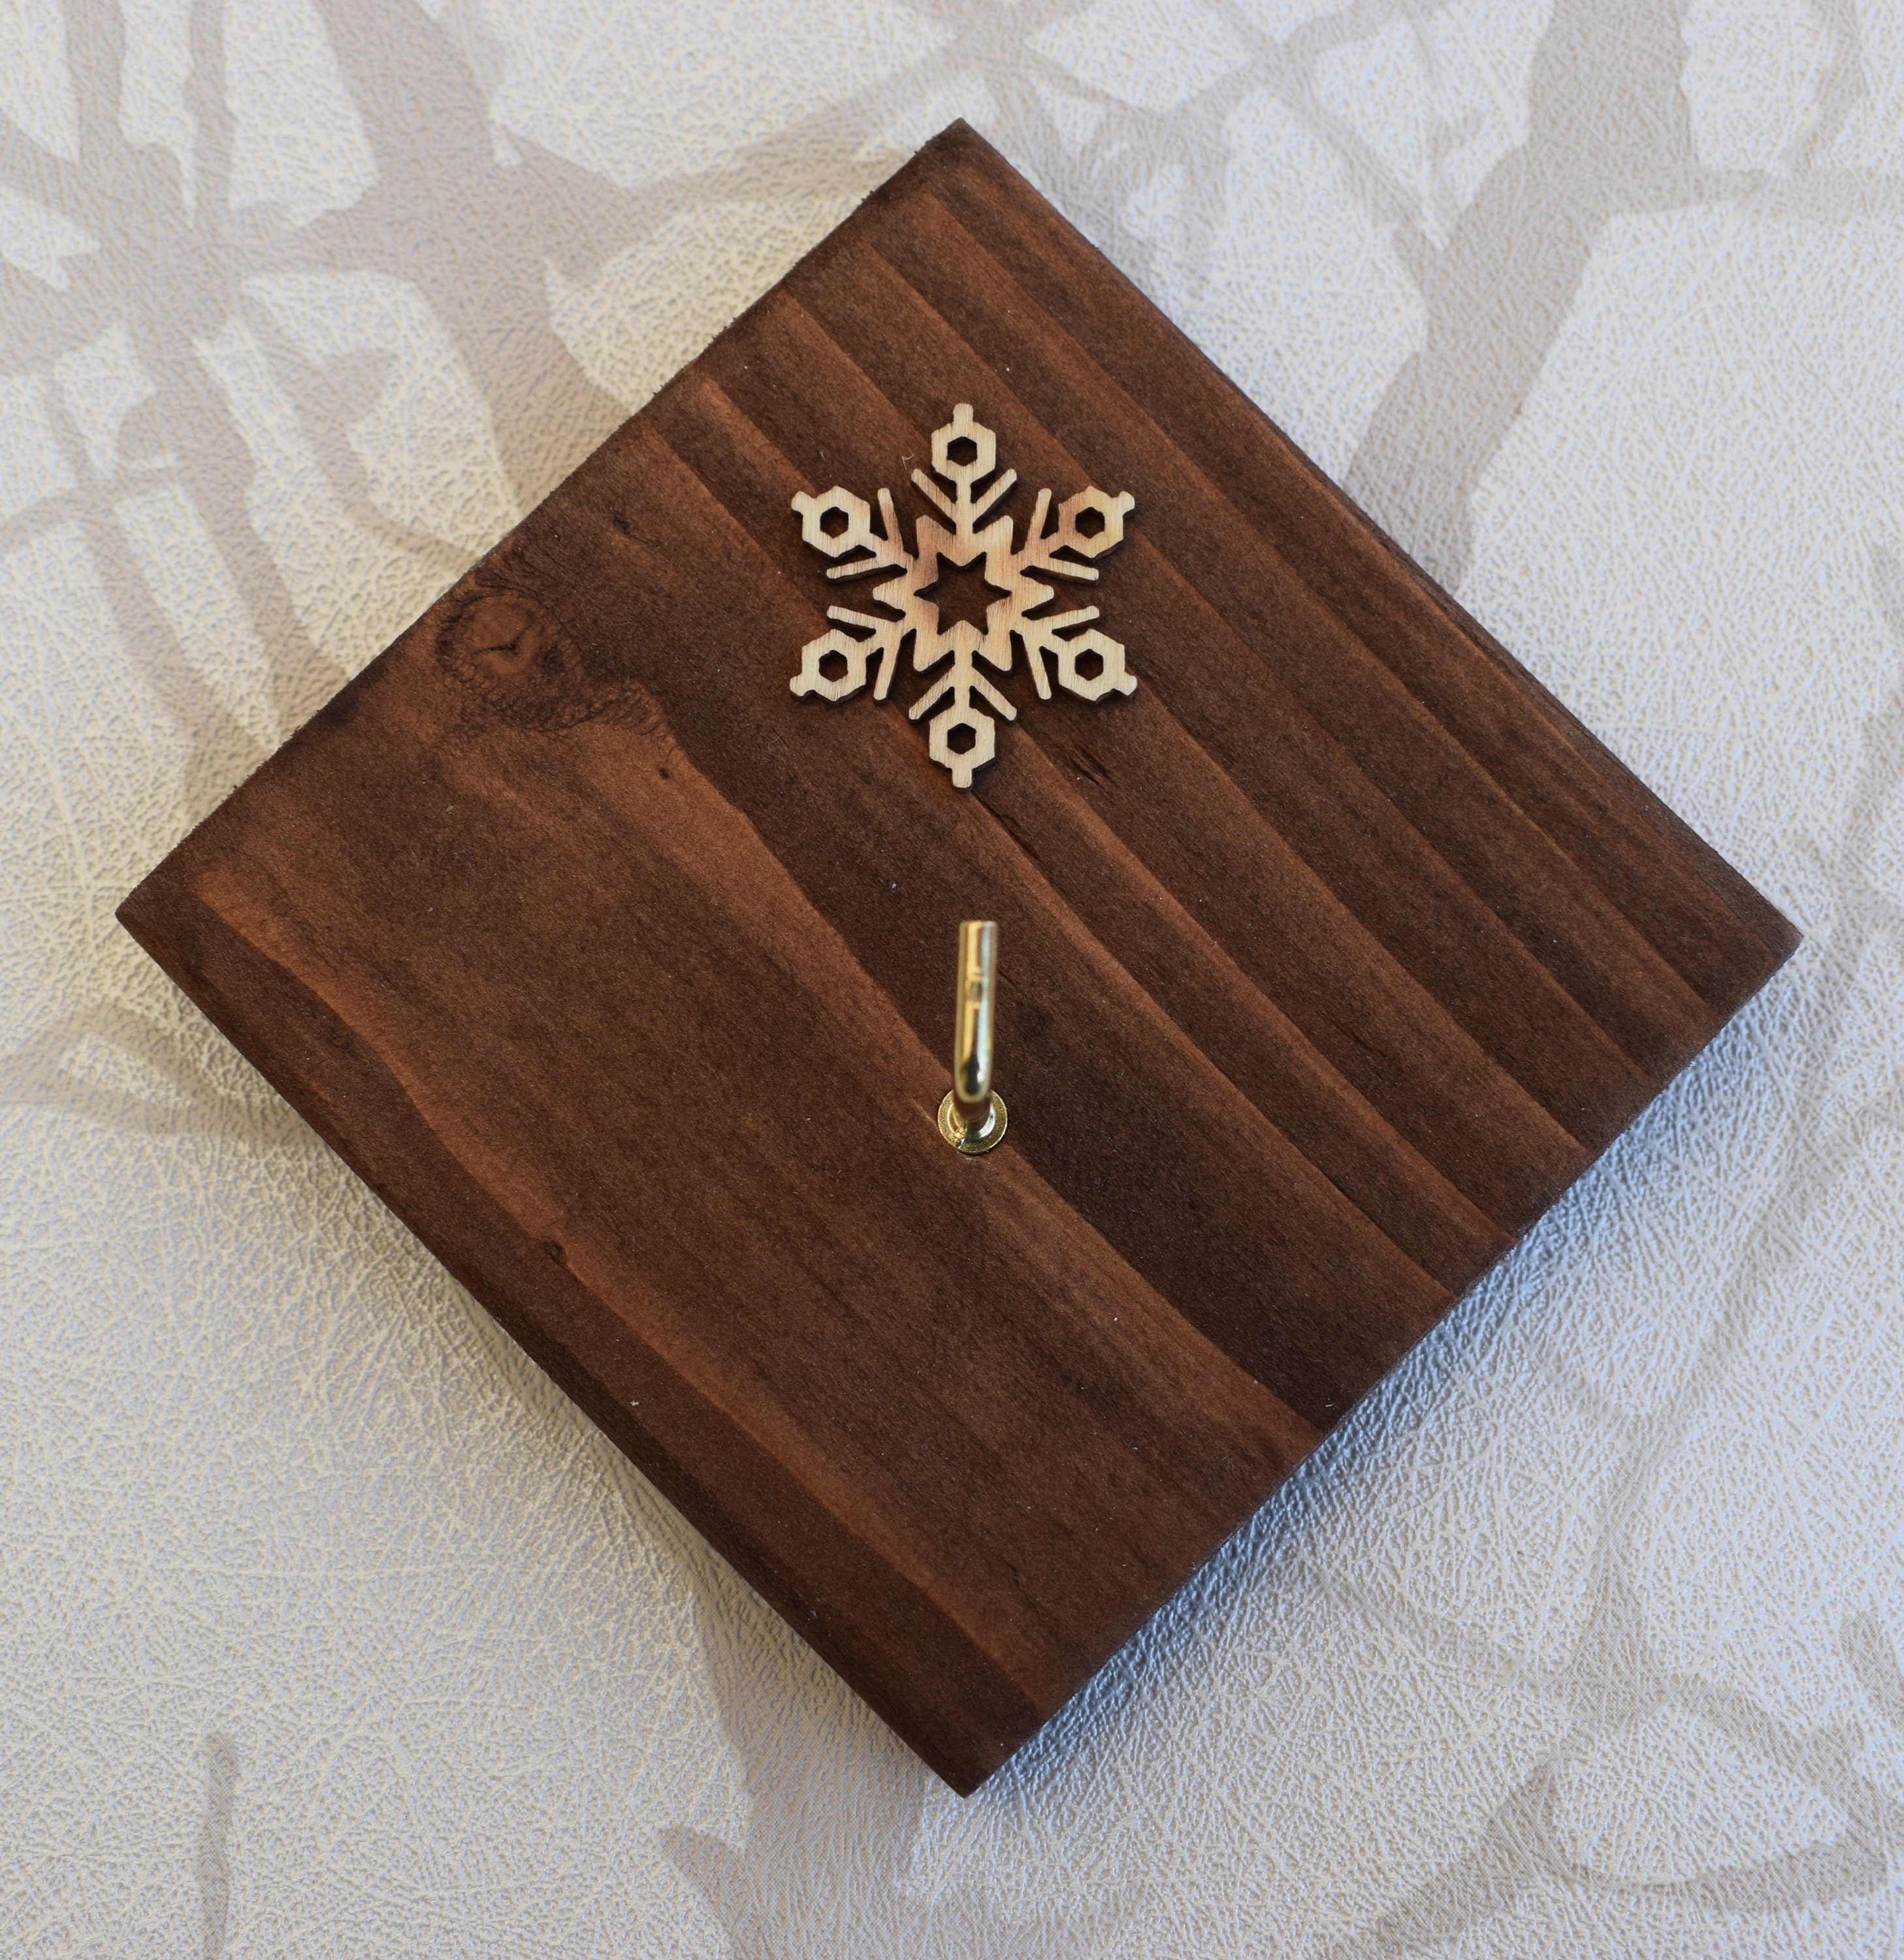 Wooden Snowflake 9”